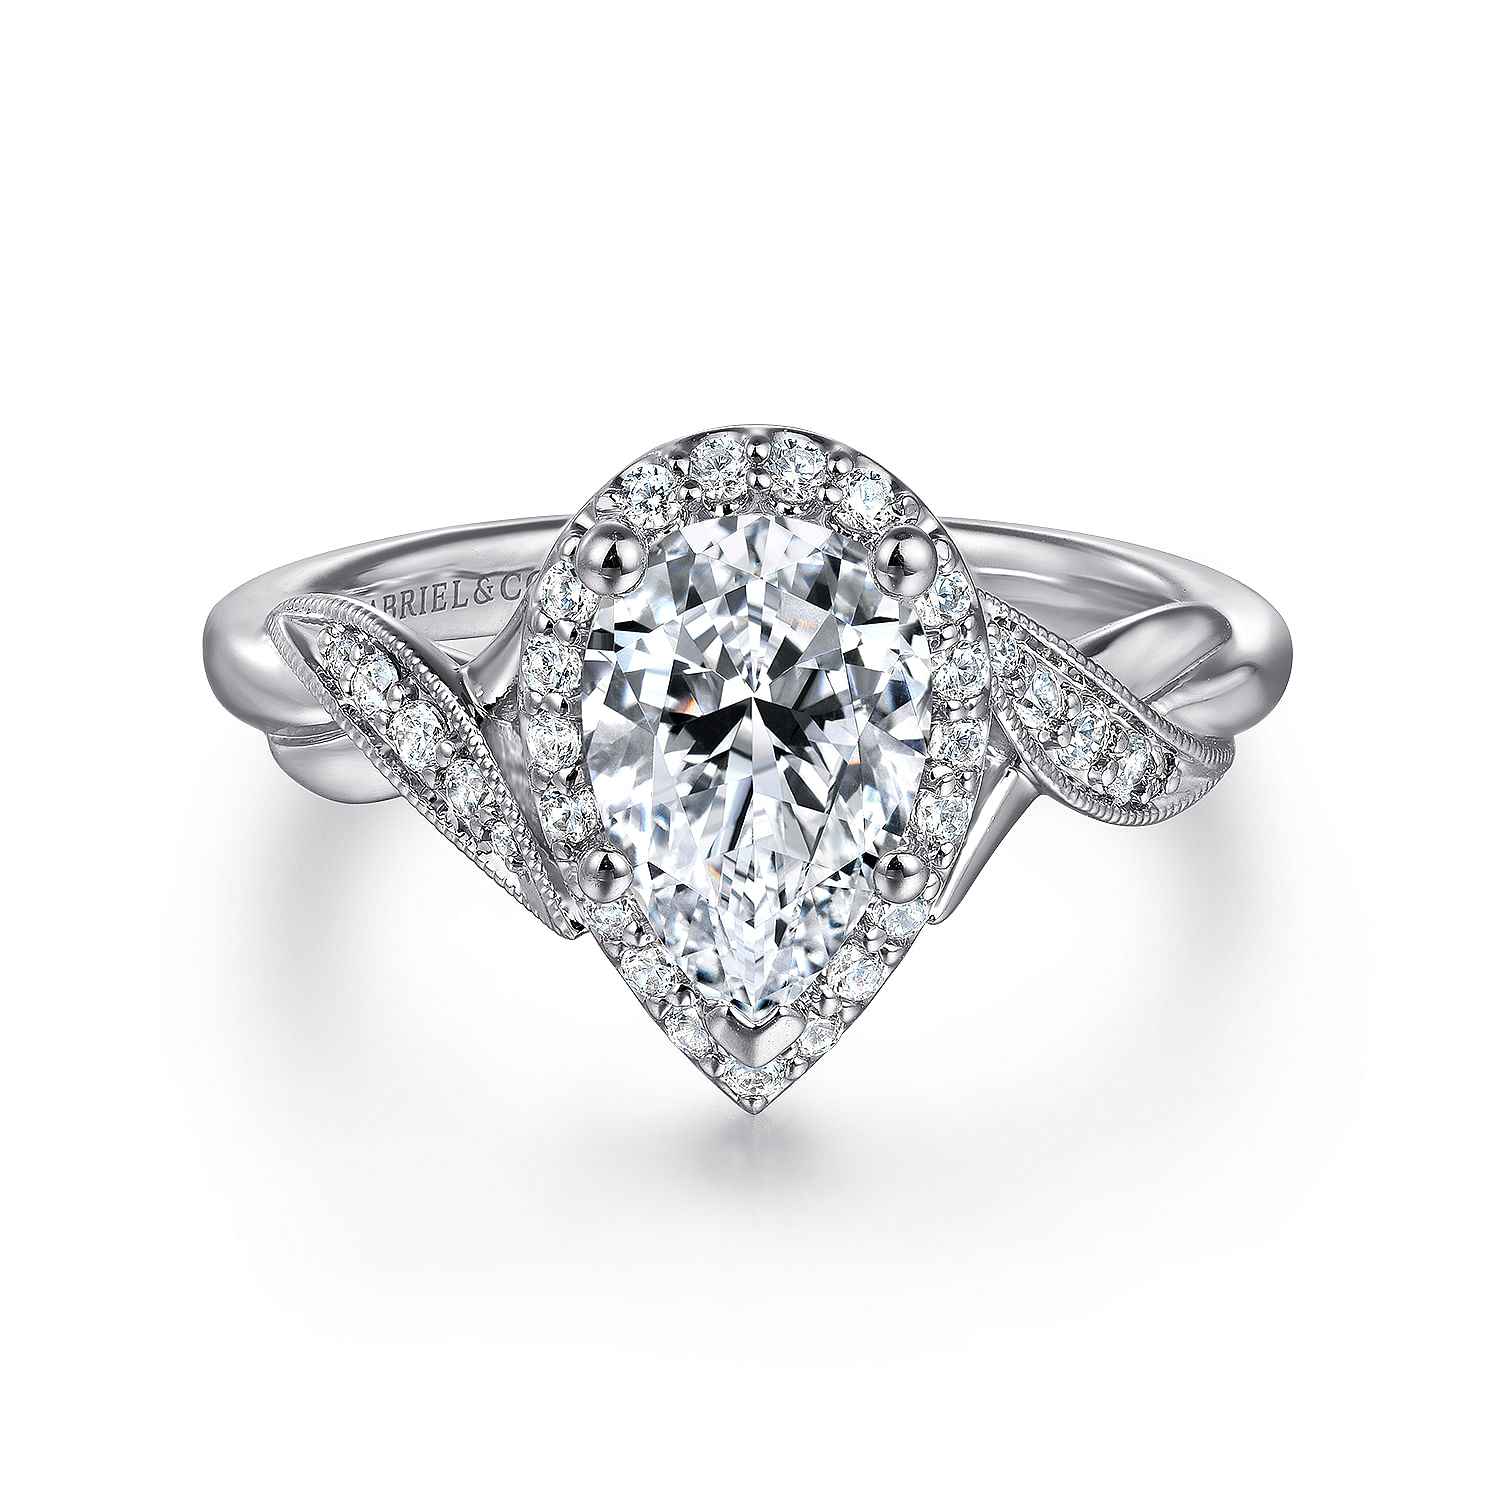 Shae - Vintage Inspired 14K White Gold Pear Shape Halo Diamond Engagement Ring